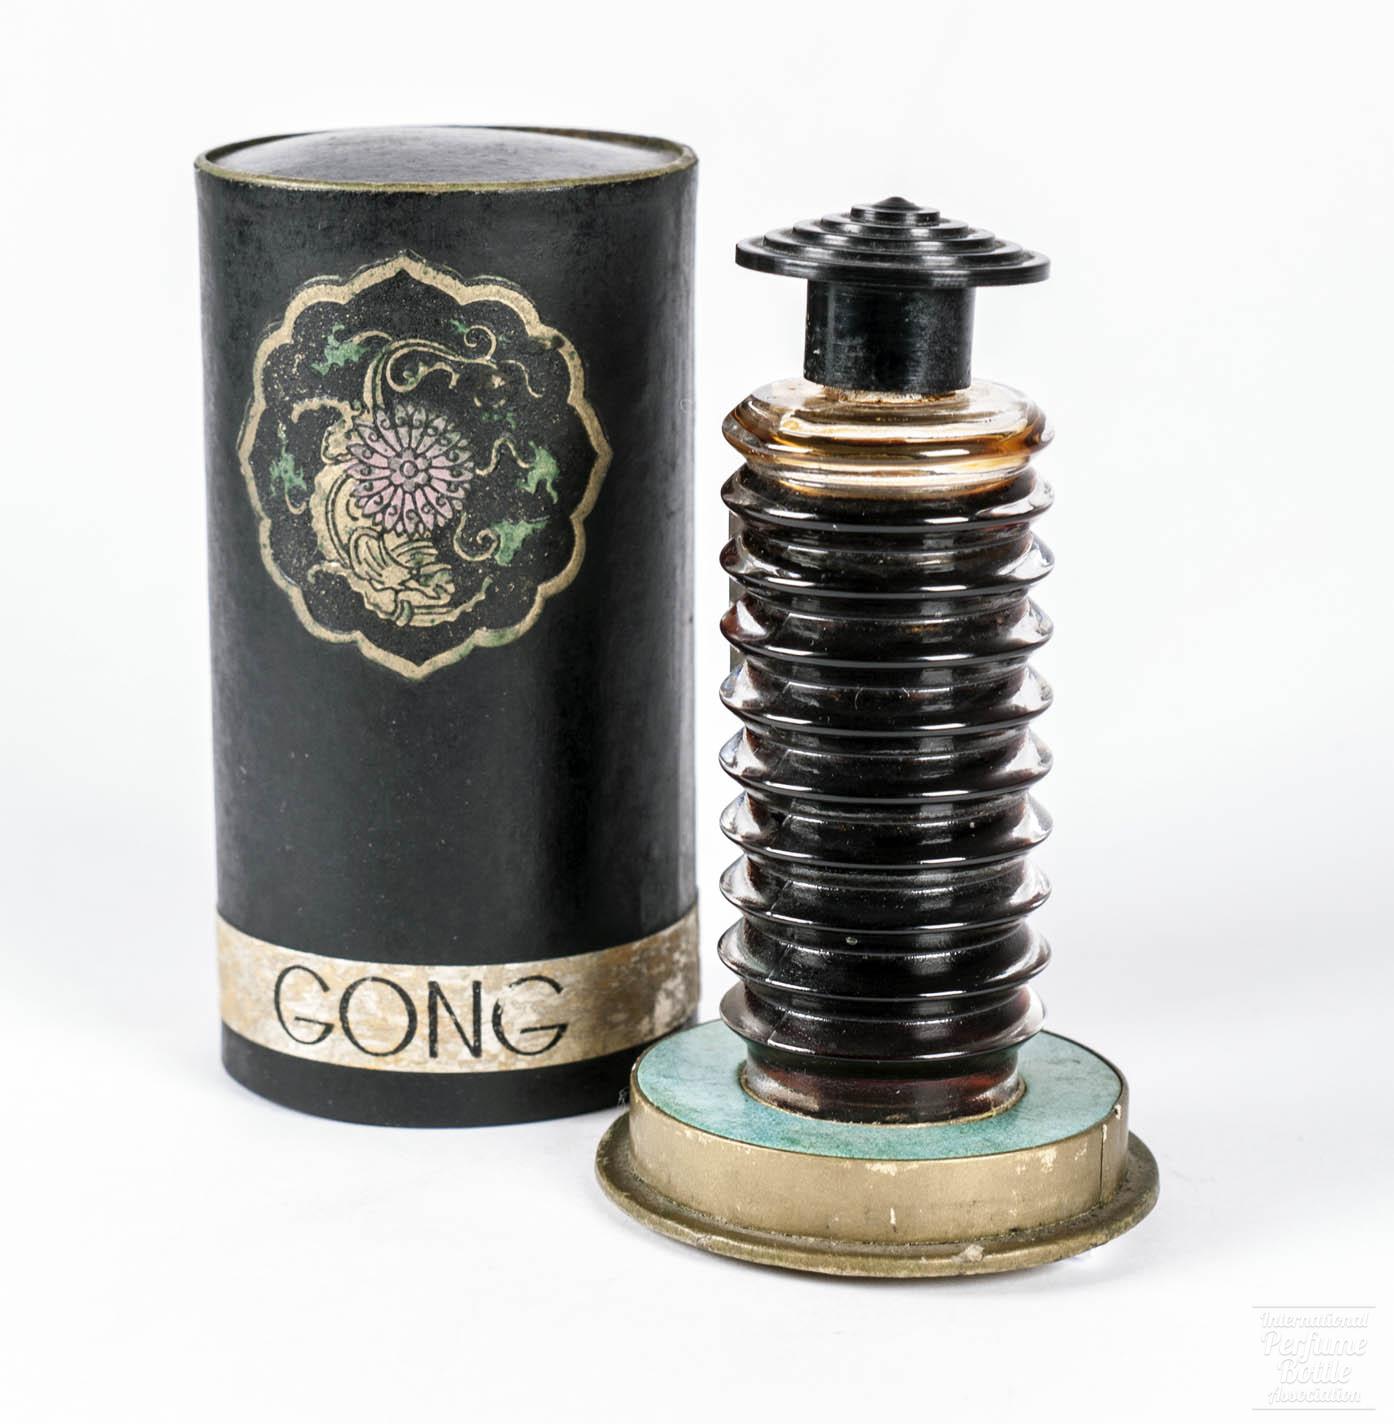 "Gong" by Perfumería Parera